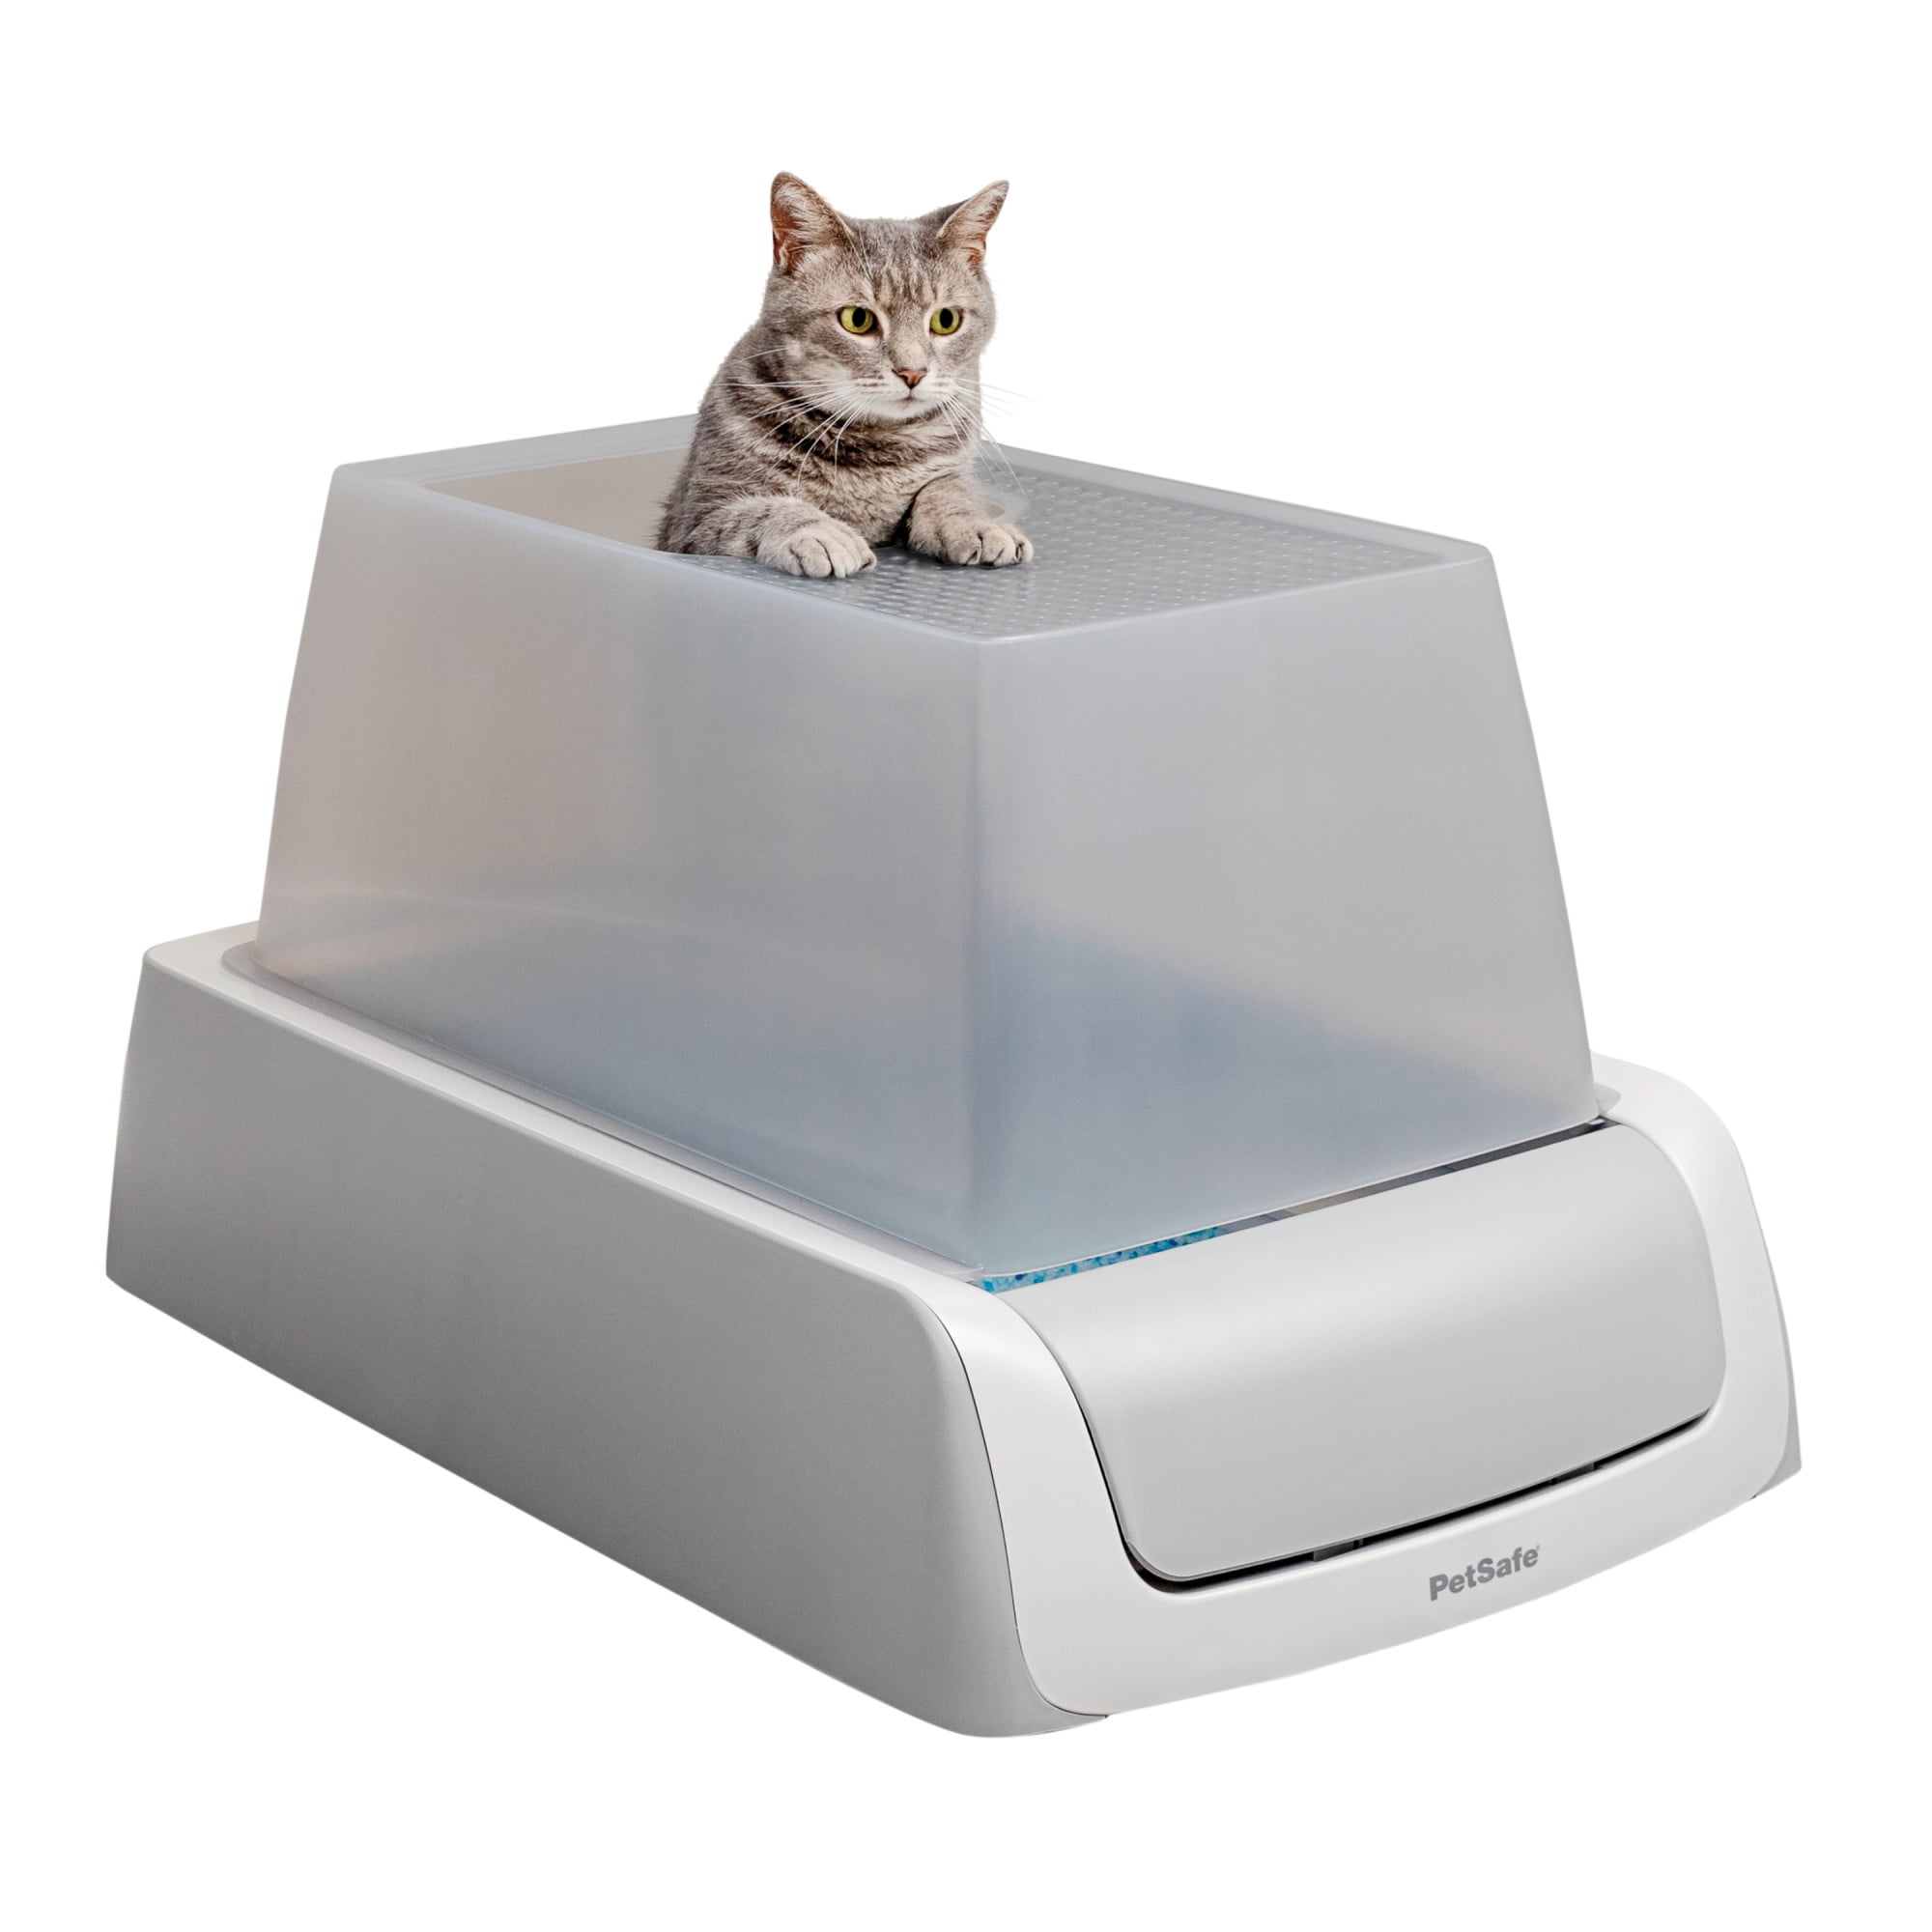 PetSafe ScoopFree Automatic Self Cleaning Cat Litter Box, TopEntry